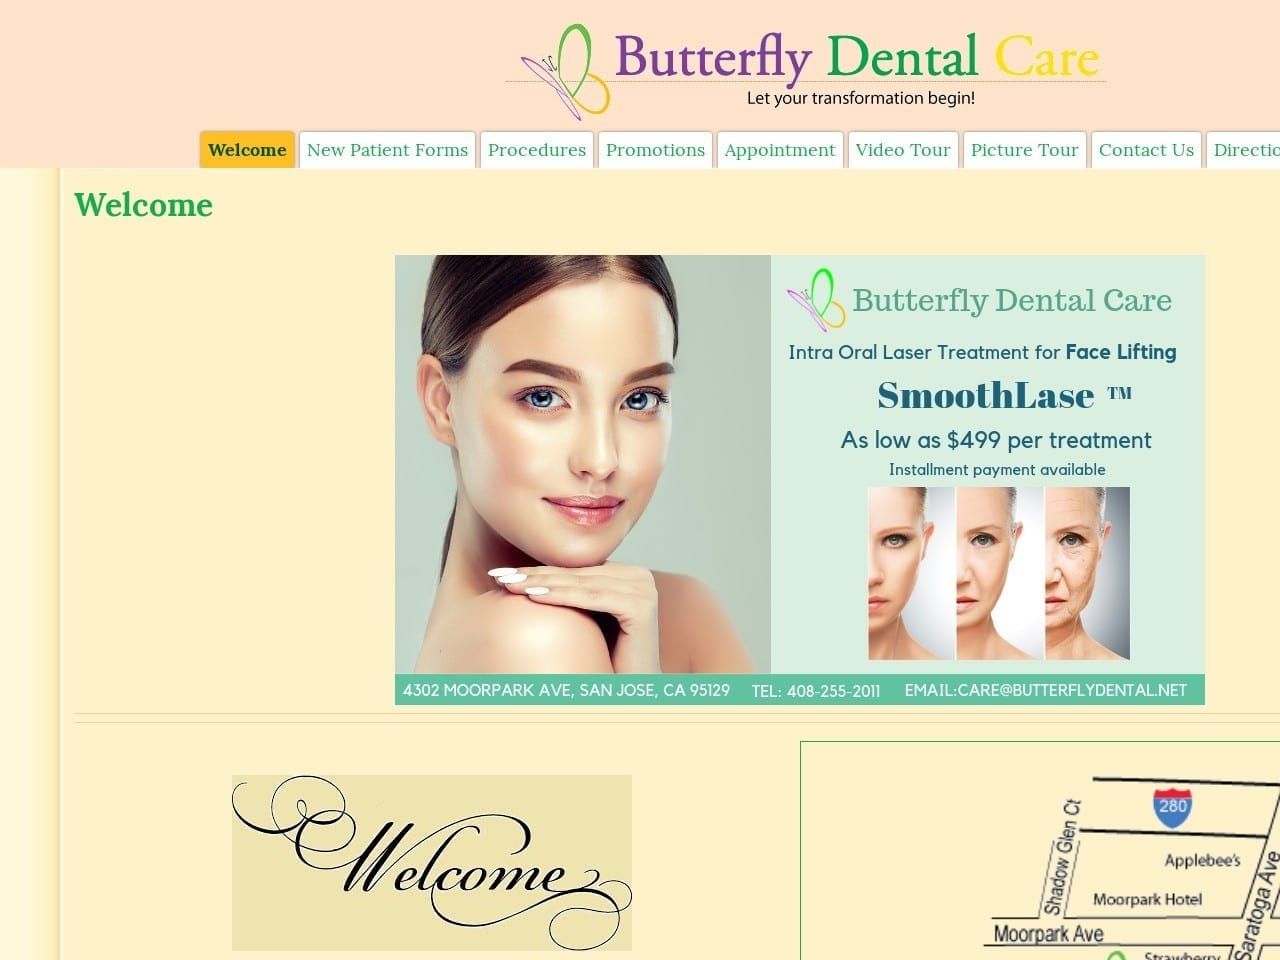 Butterfly Dental Care Website Screenshot from butterflydental.net